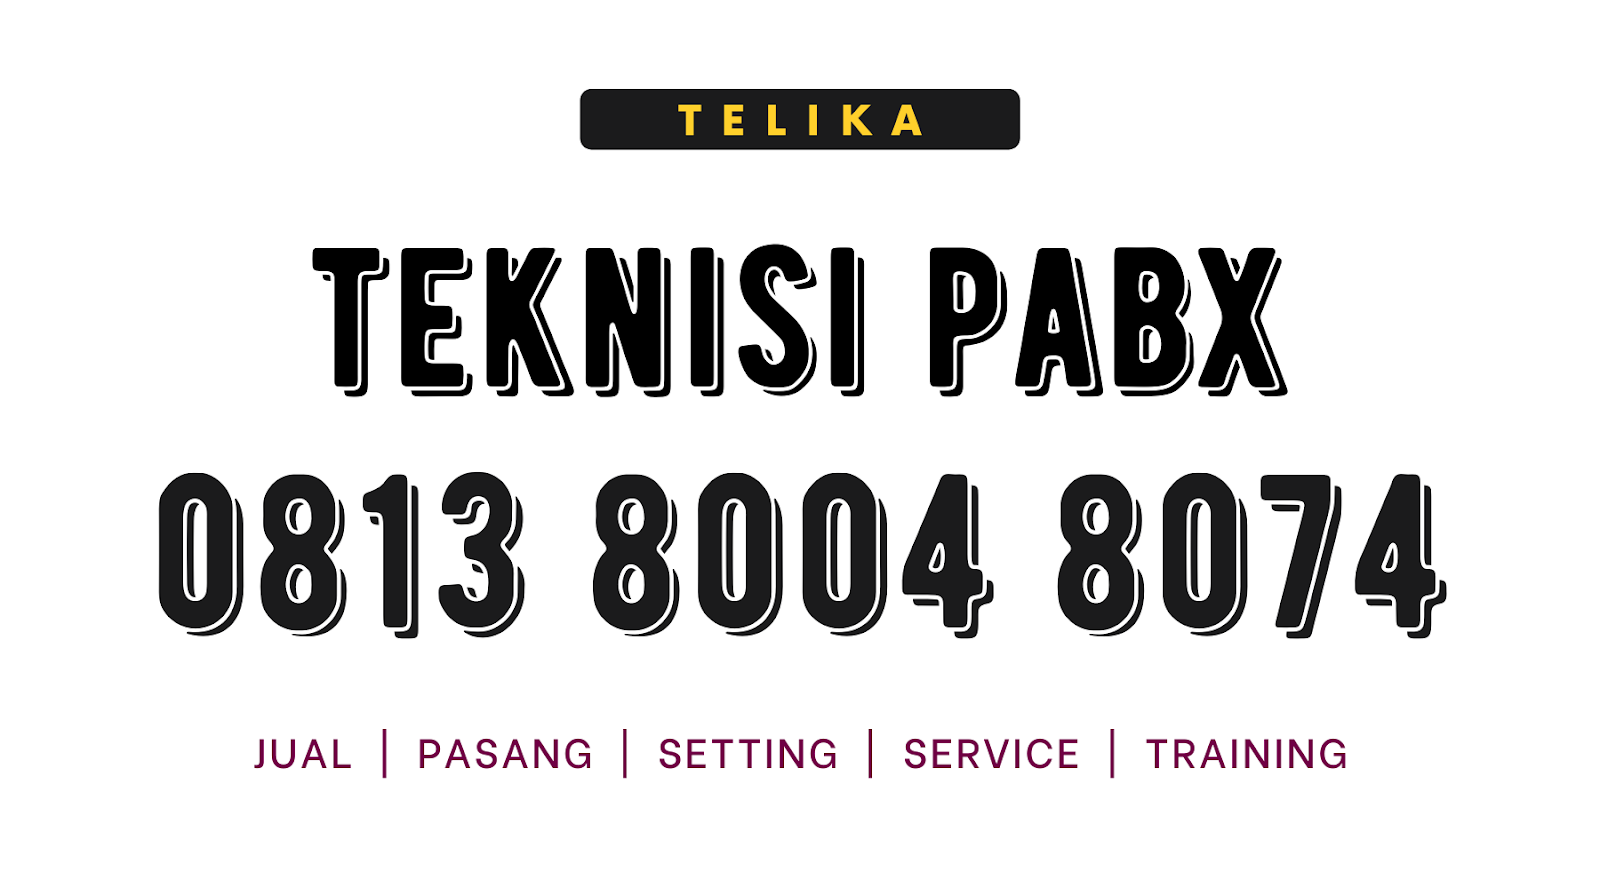 Service PABX Jakarta - Telika - 0813.8004.8074